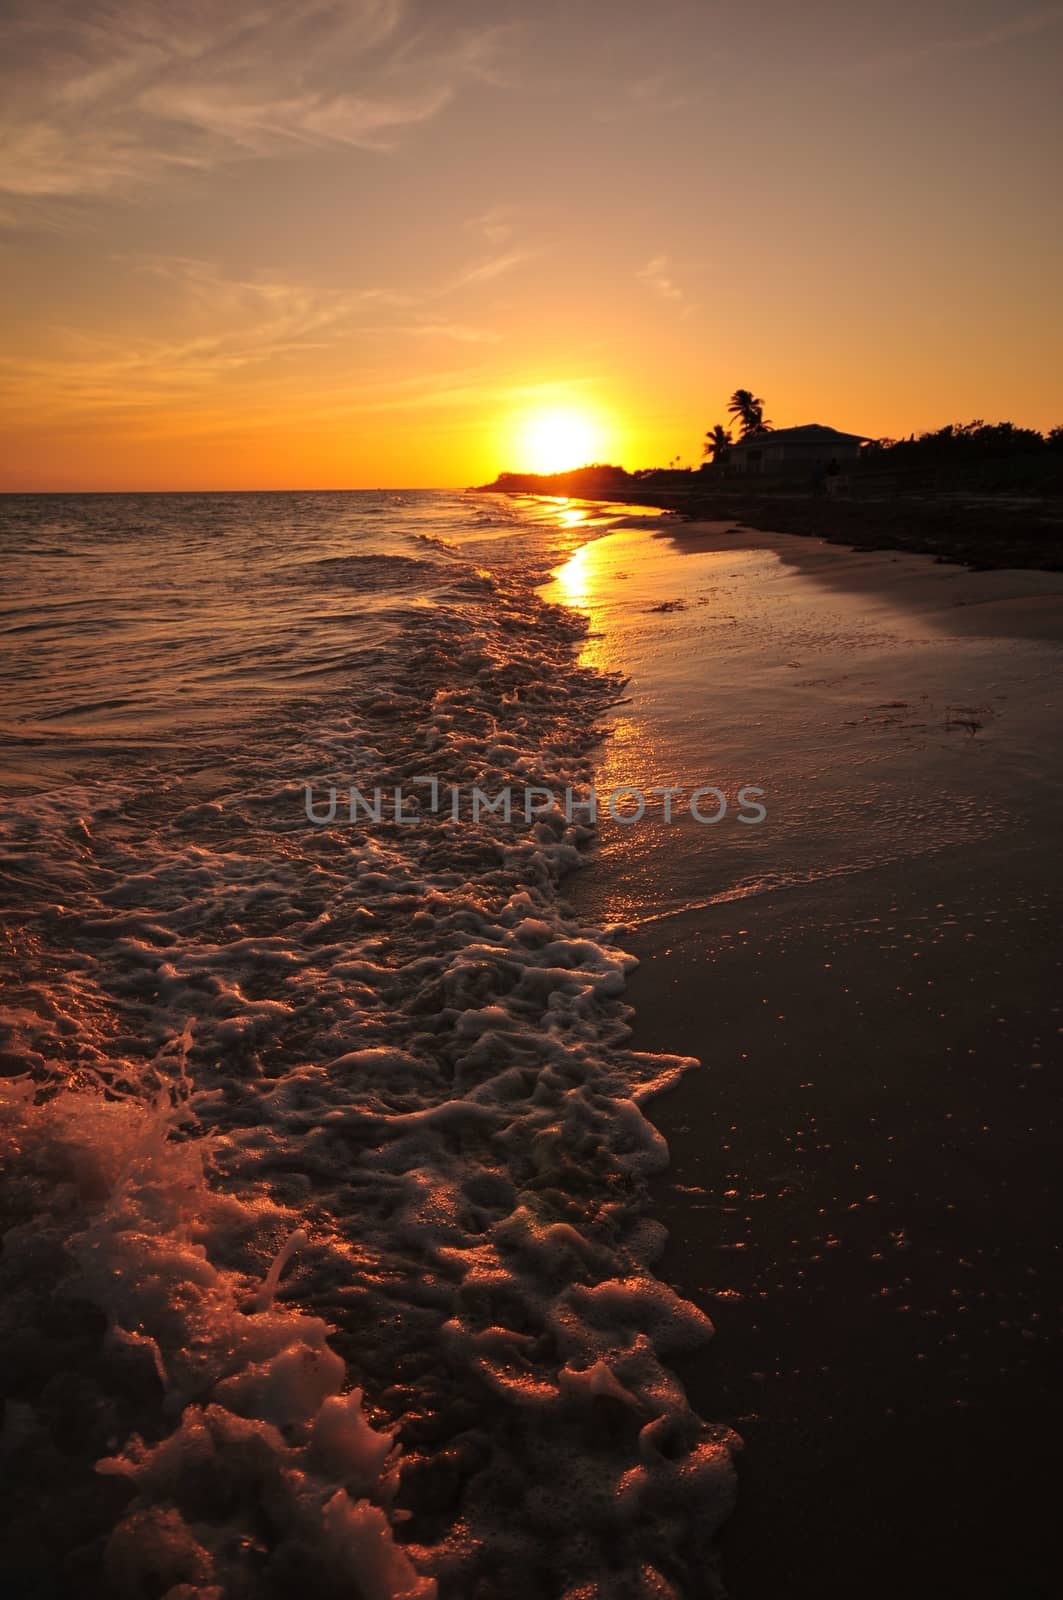 Florida Keys Sunset by welcomia